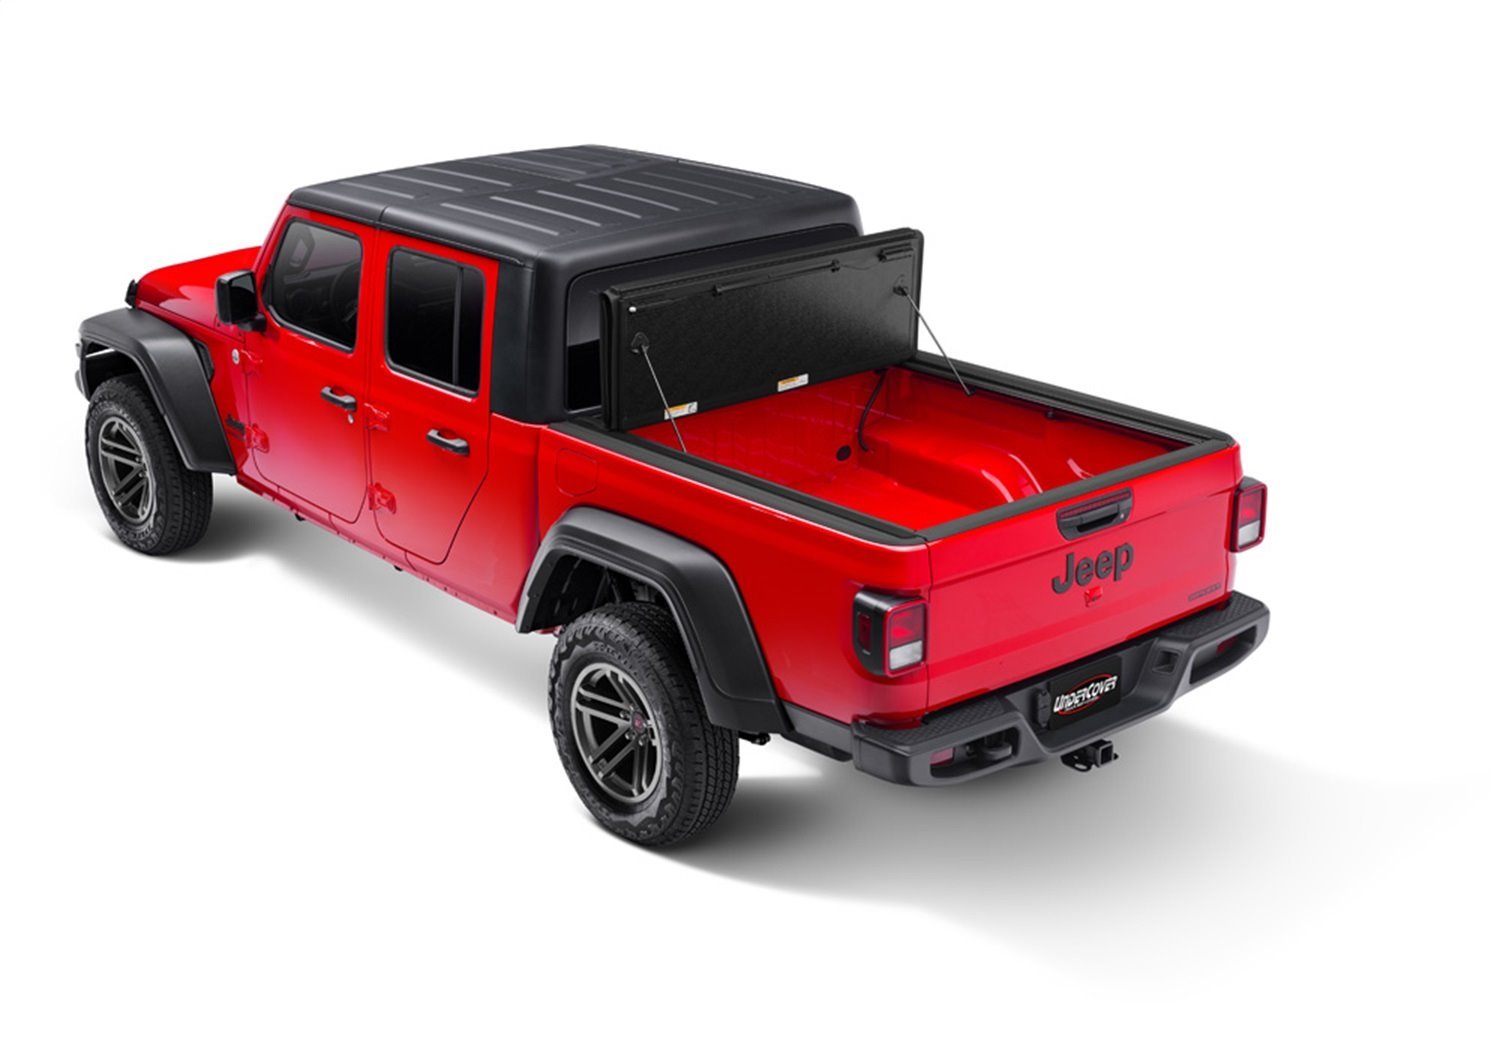 FX31010 Flex Hard Folding Cover, Fits Select Jeep Gladiator, Black Textured